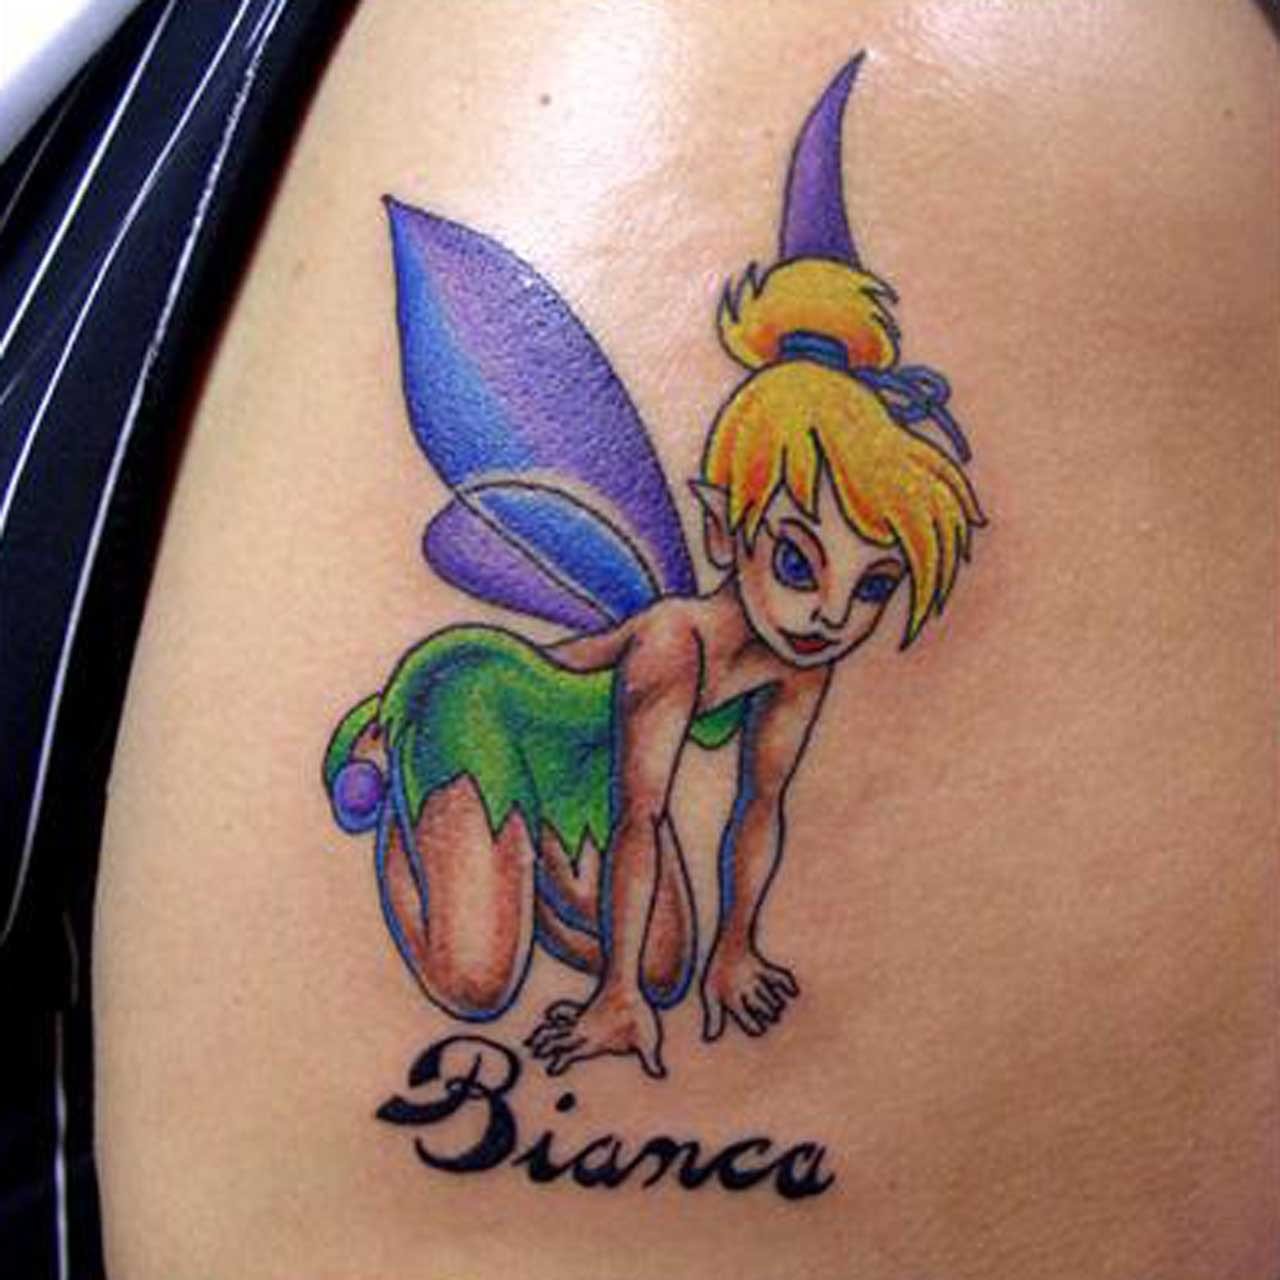 Bianca - Animated Fairy Tattoo Design